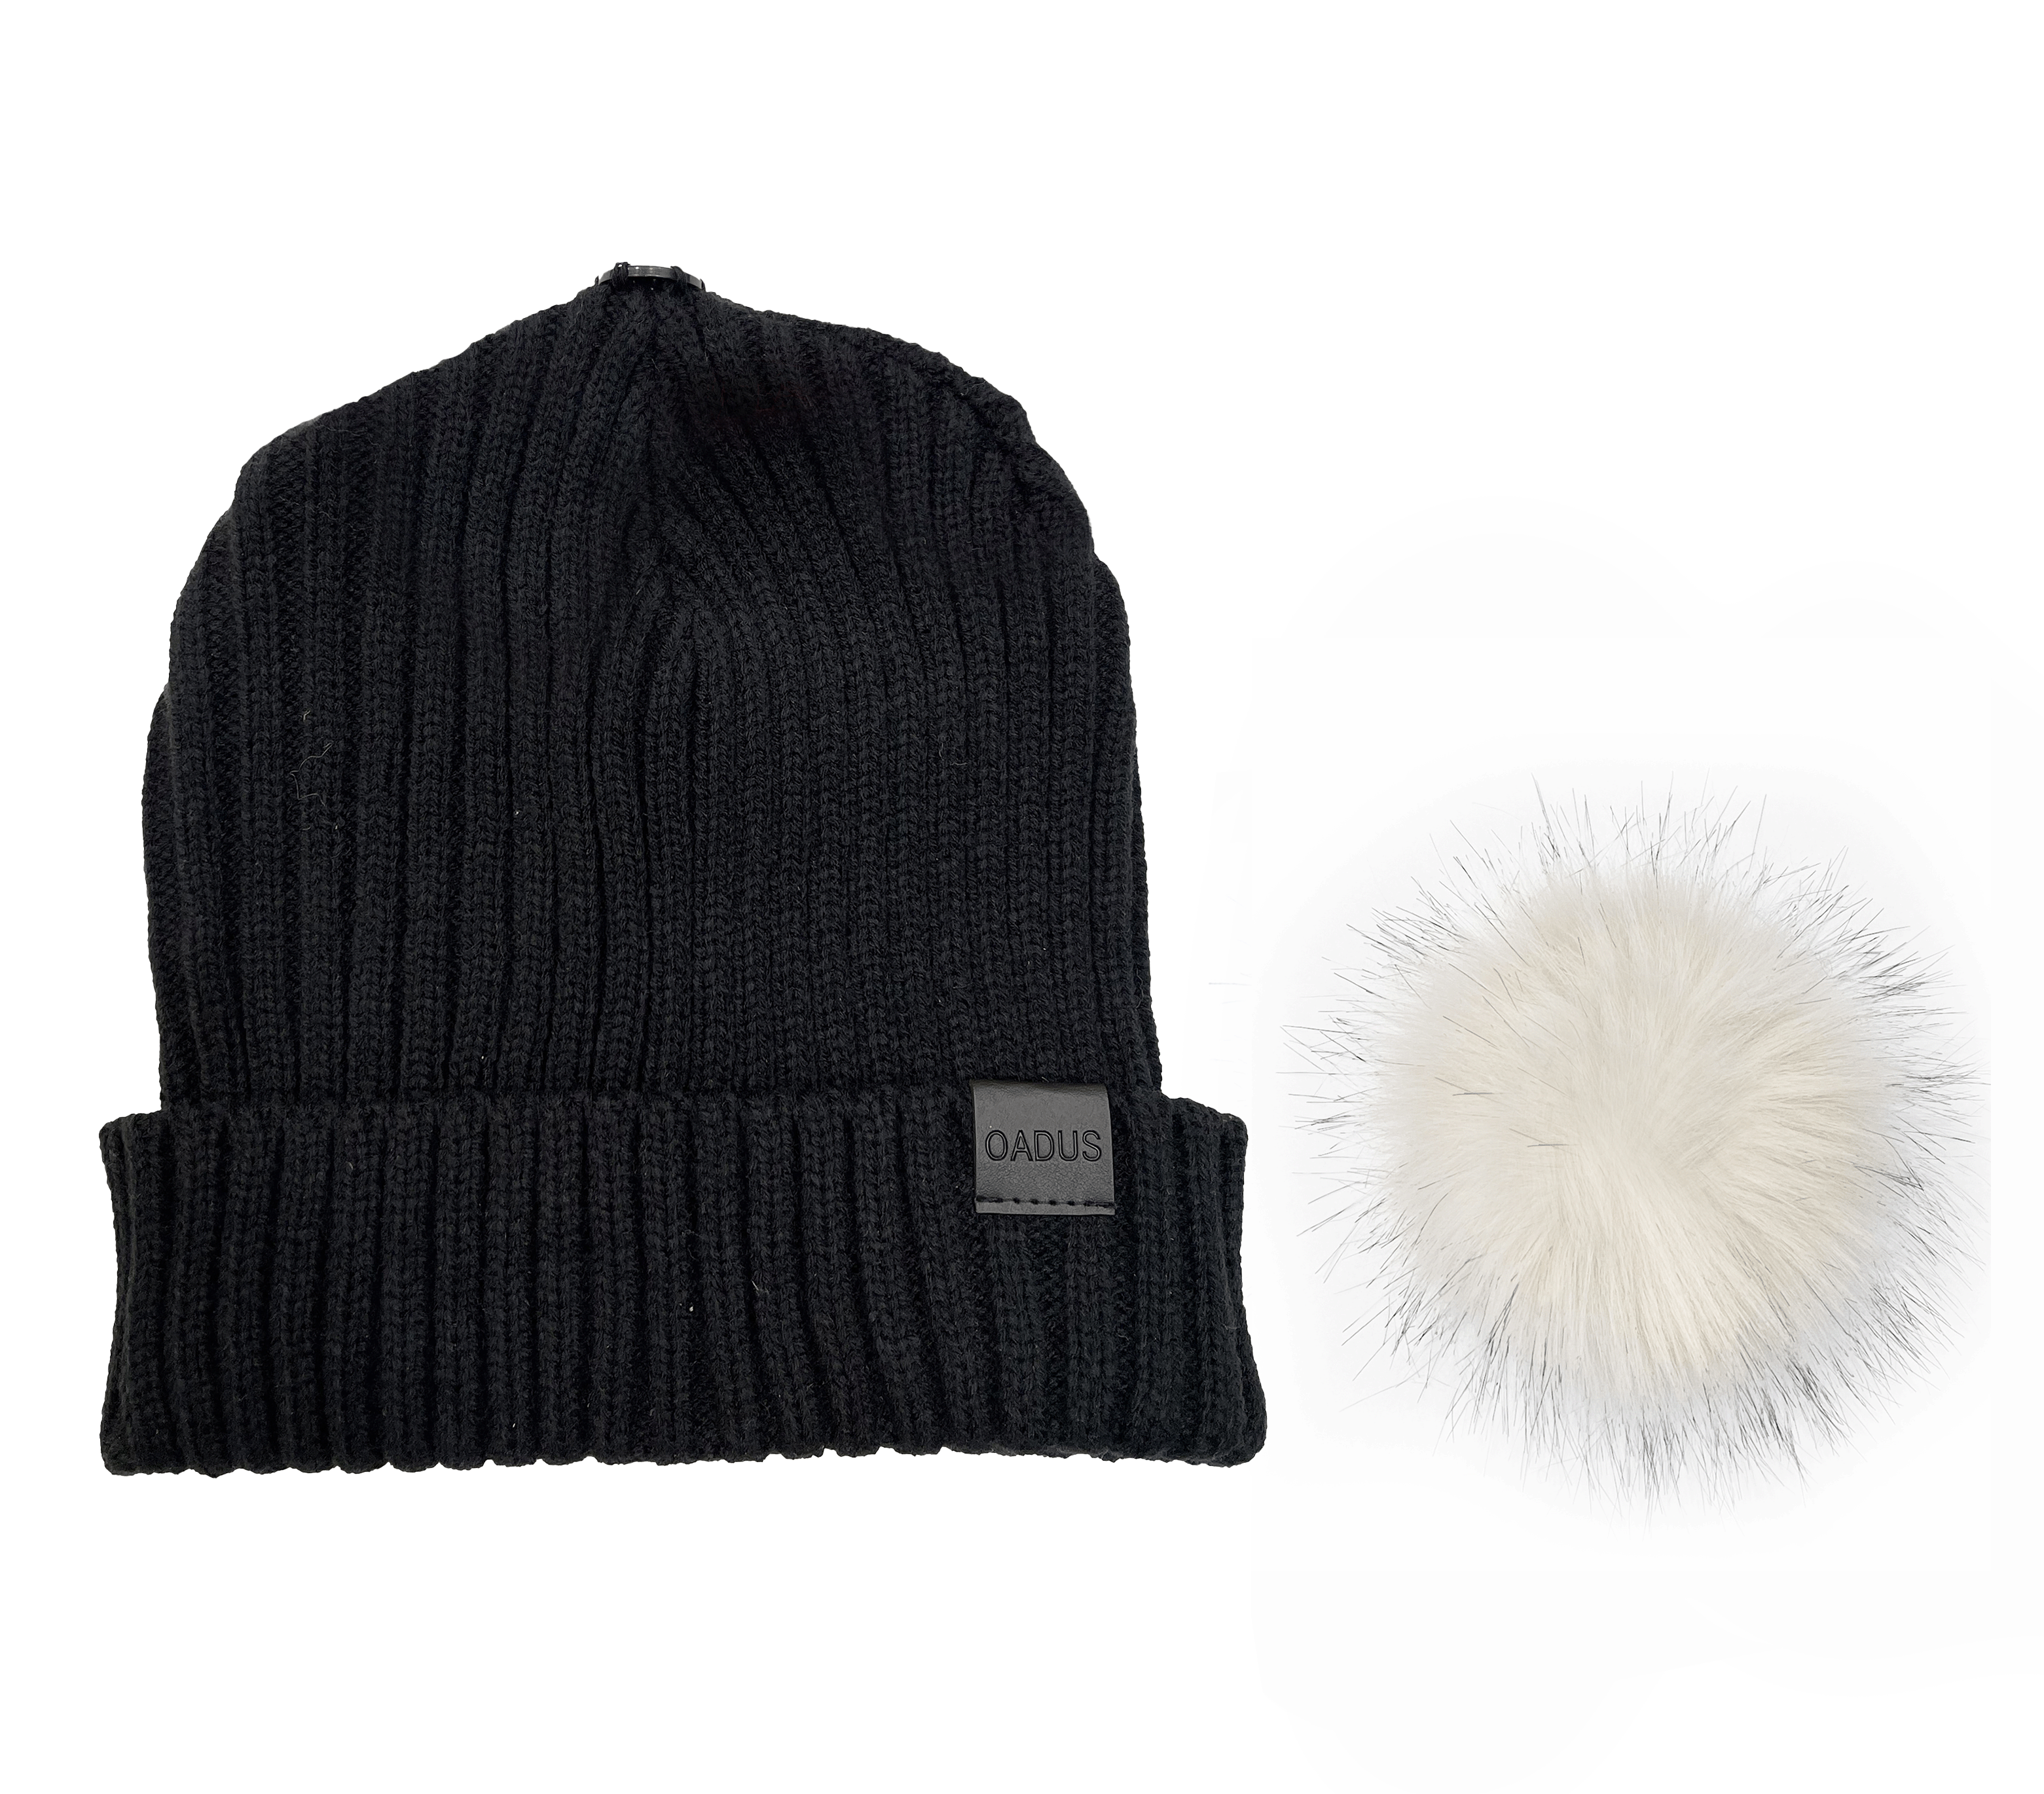 Pudus Lifestyle Co. Geometric Black Beanie Winter Hat